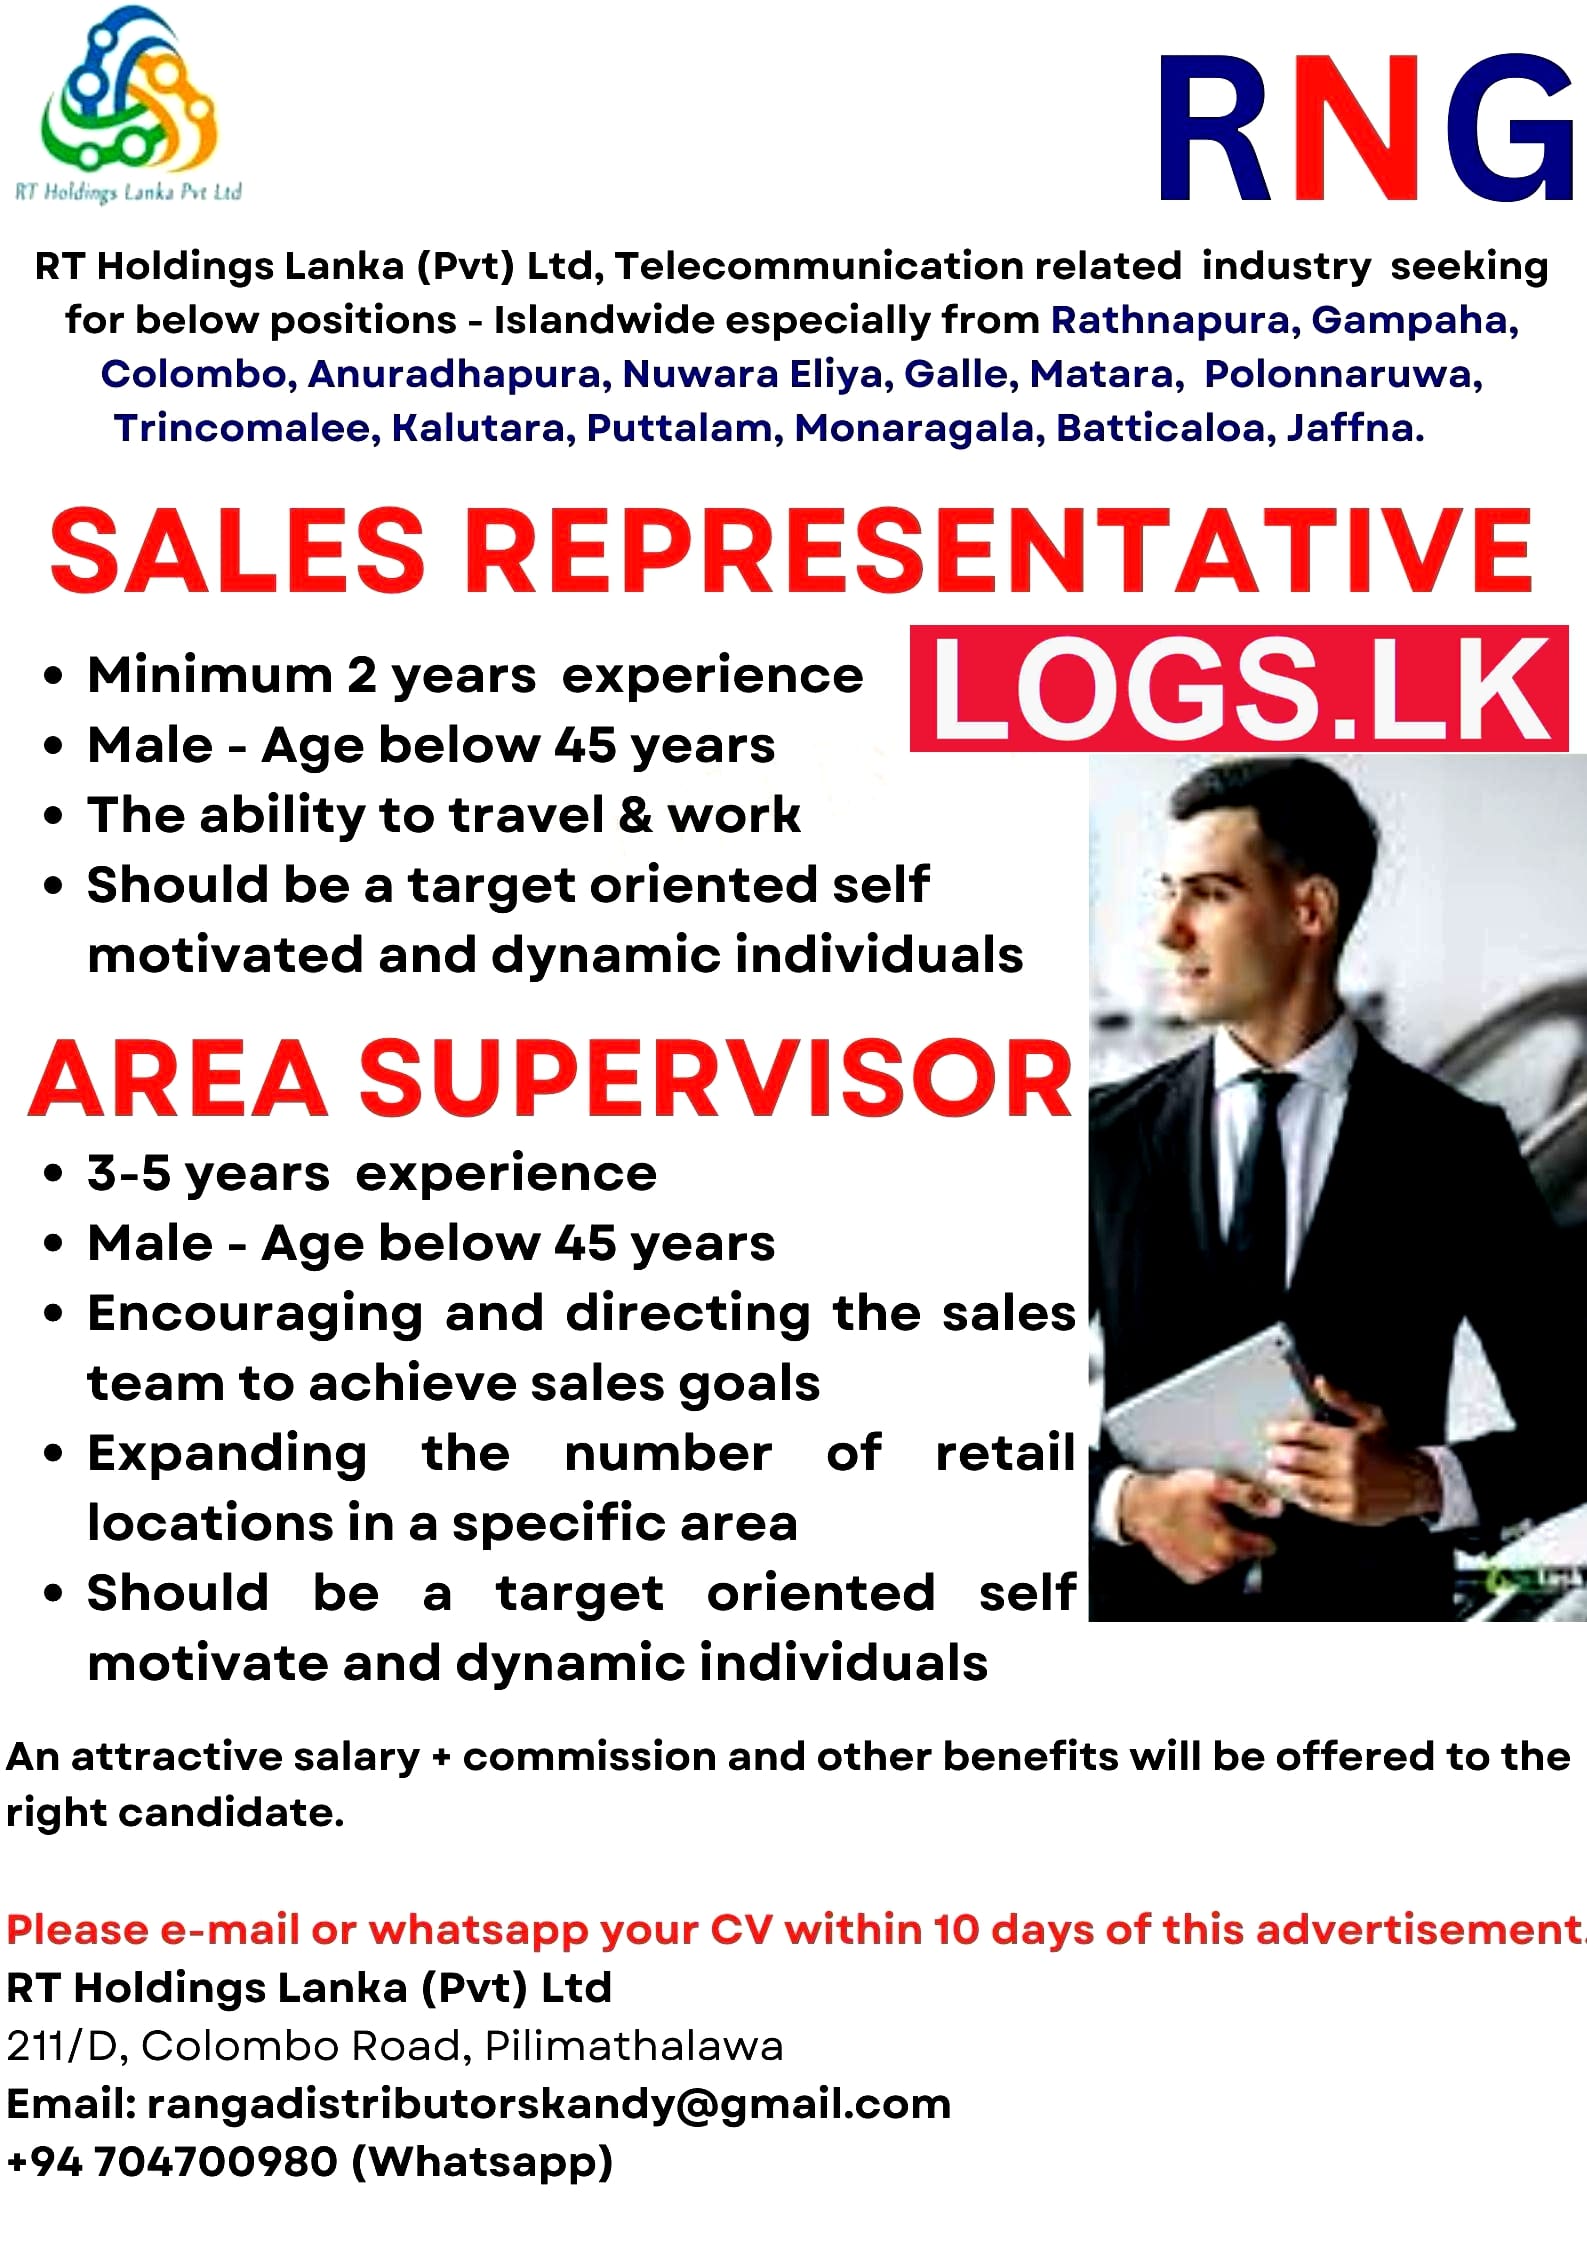 Sales Representative / Area Supervisor Vacancies at RT Holdings Lanka (Pvt) Ltd